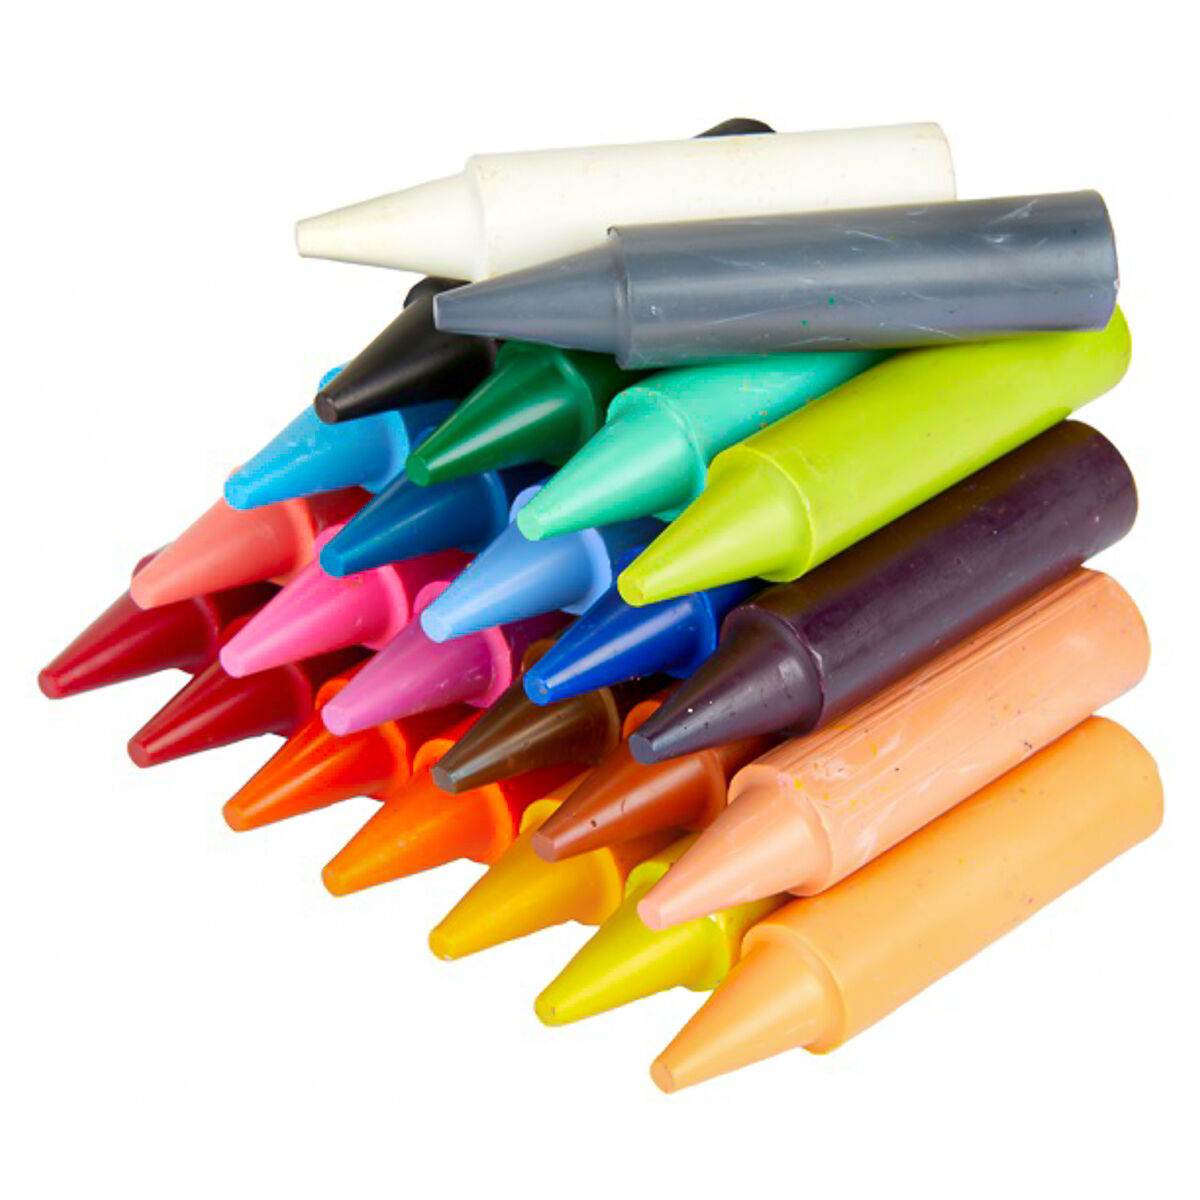 CRAYOLA My First CRAYOLA Jumbo Crayons (8 Pieces) Multicoloured – TopToy